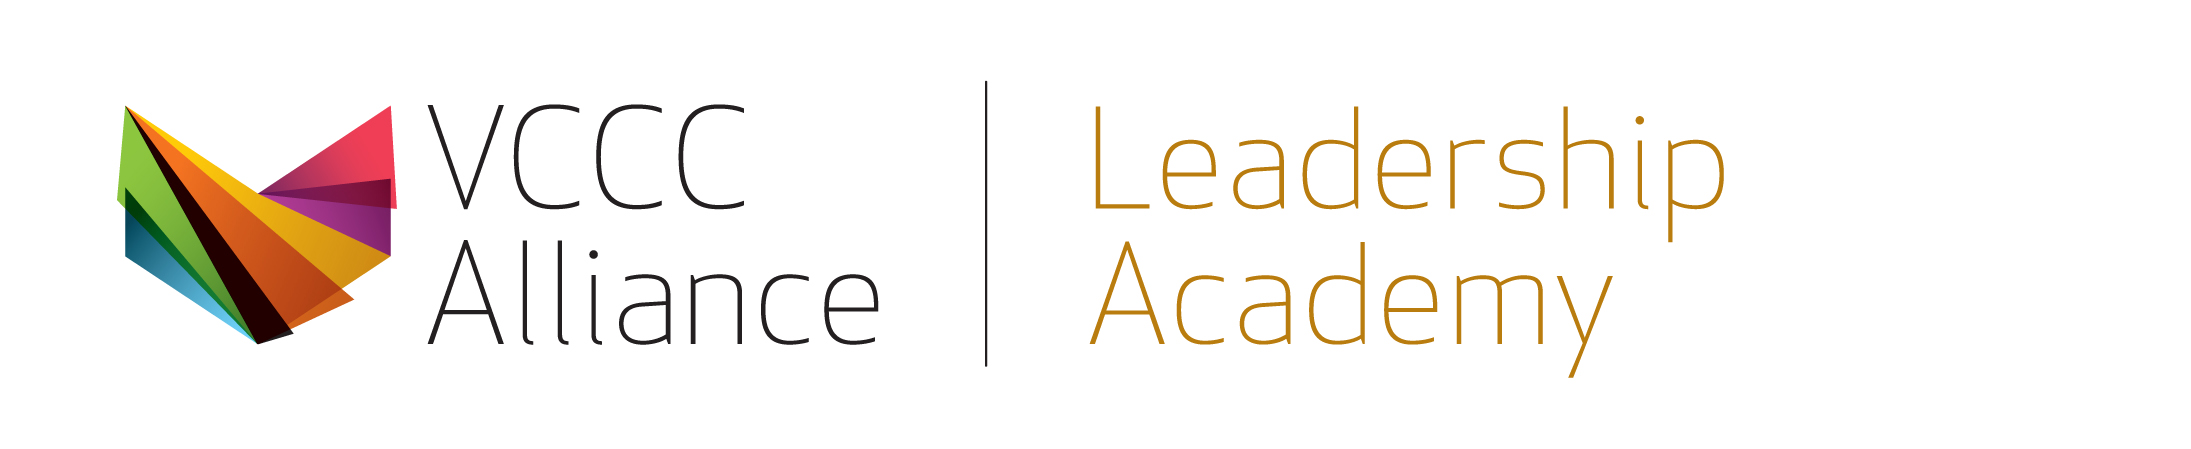 leadership-academy-logo